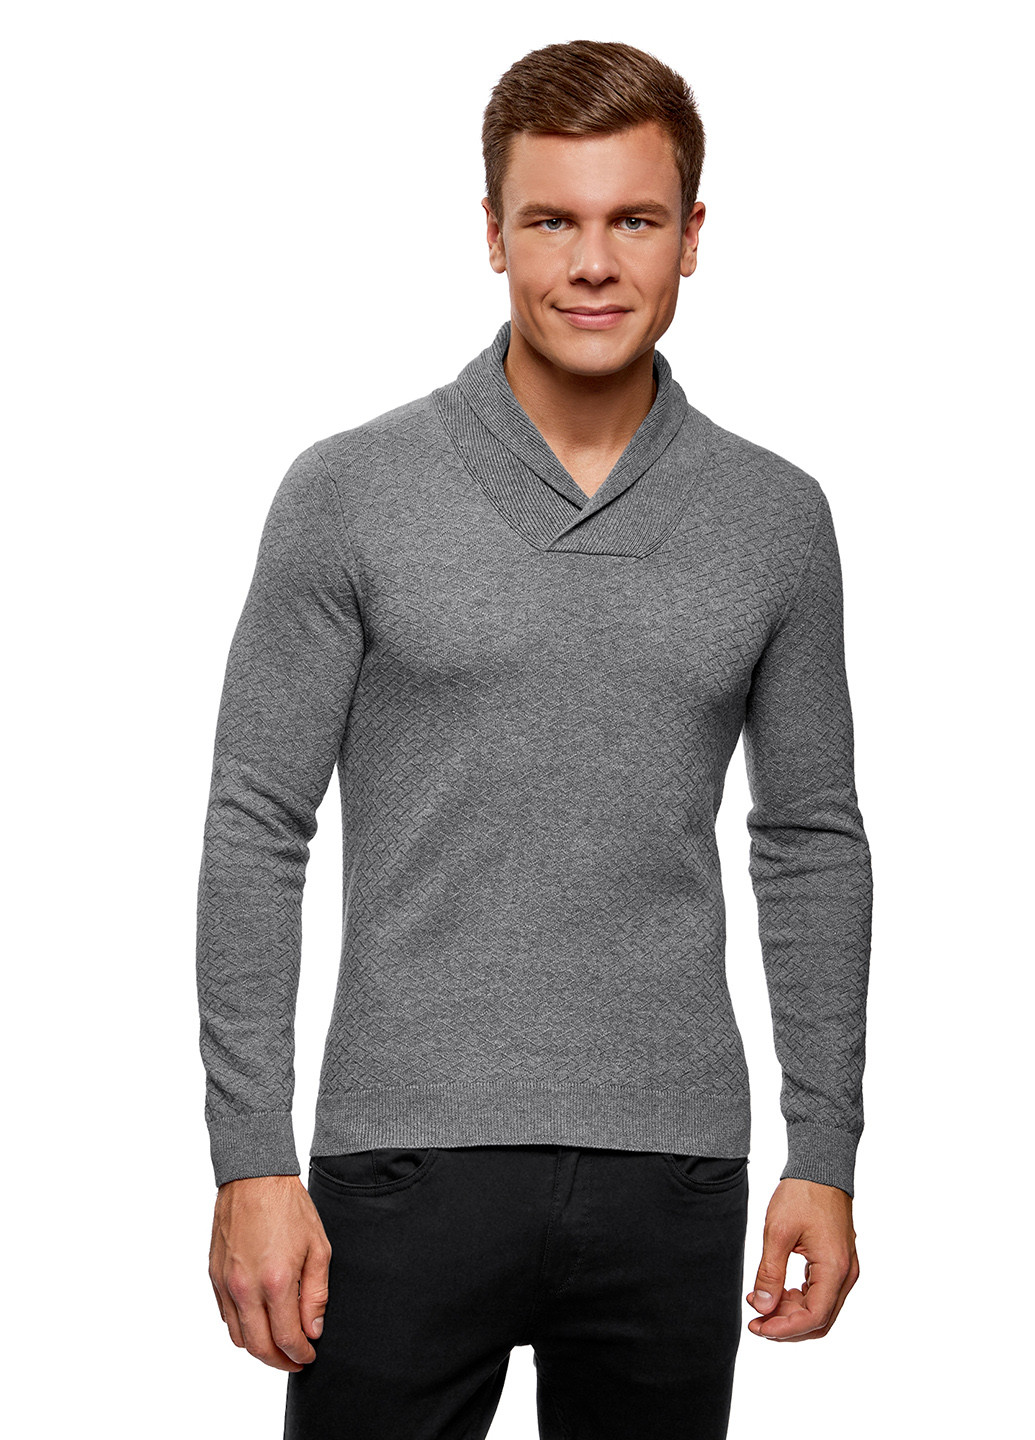 Грифельно-серый демисезонный пуловер пуловер Oodji